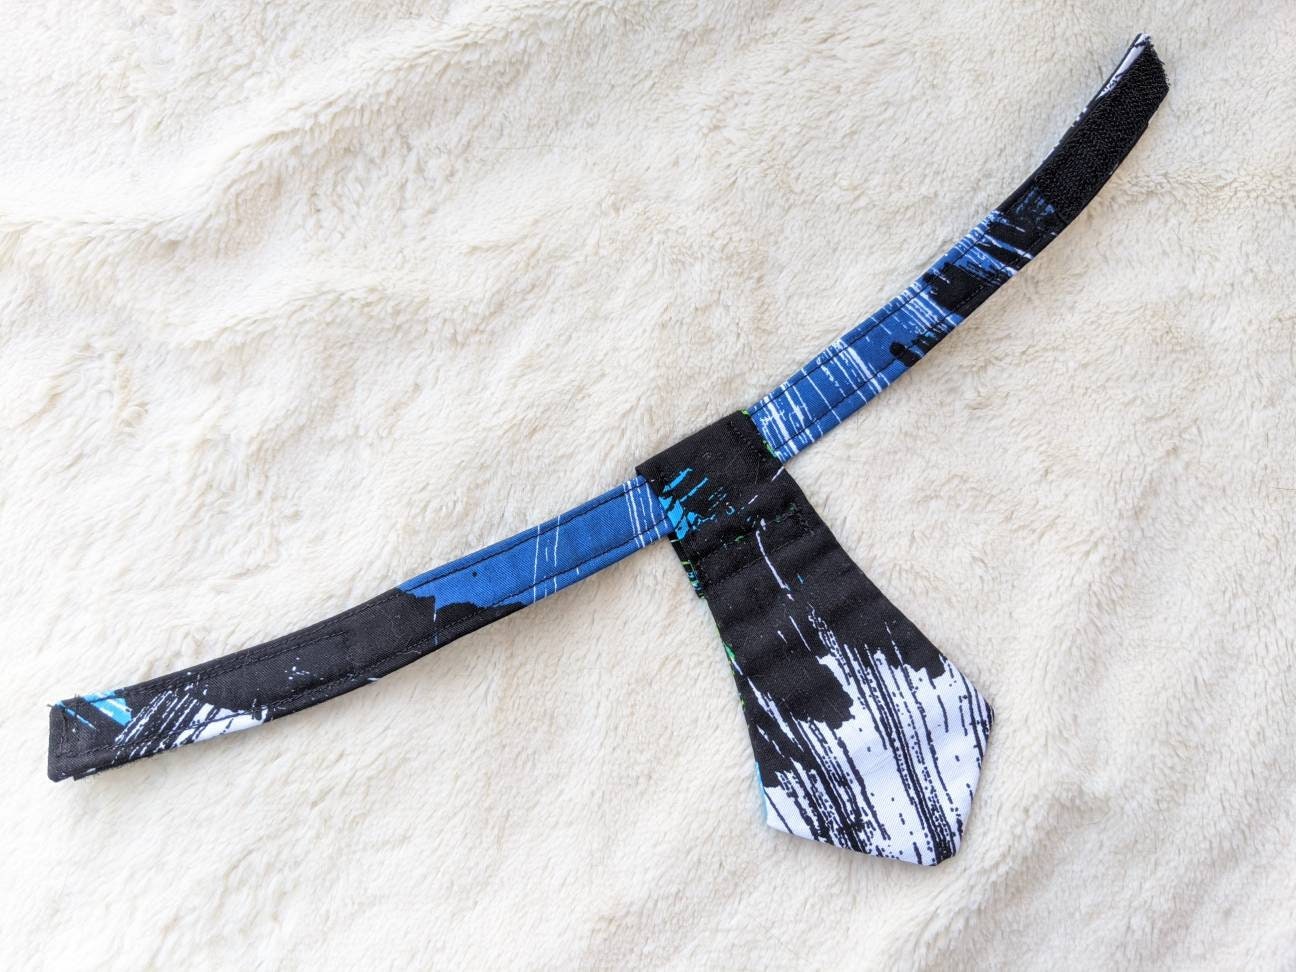 Black and Blue Skinny Adjustable Cat Tie Collar